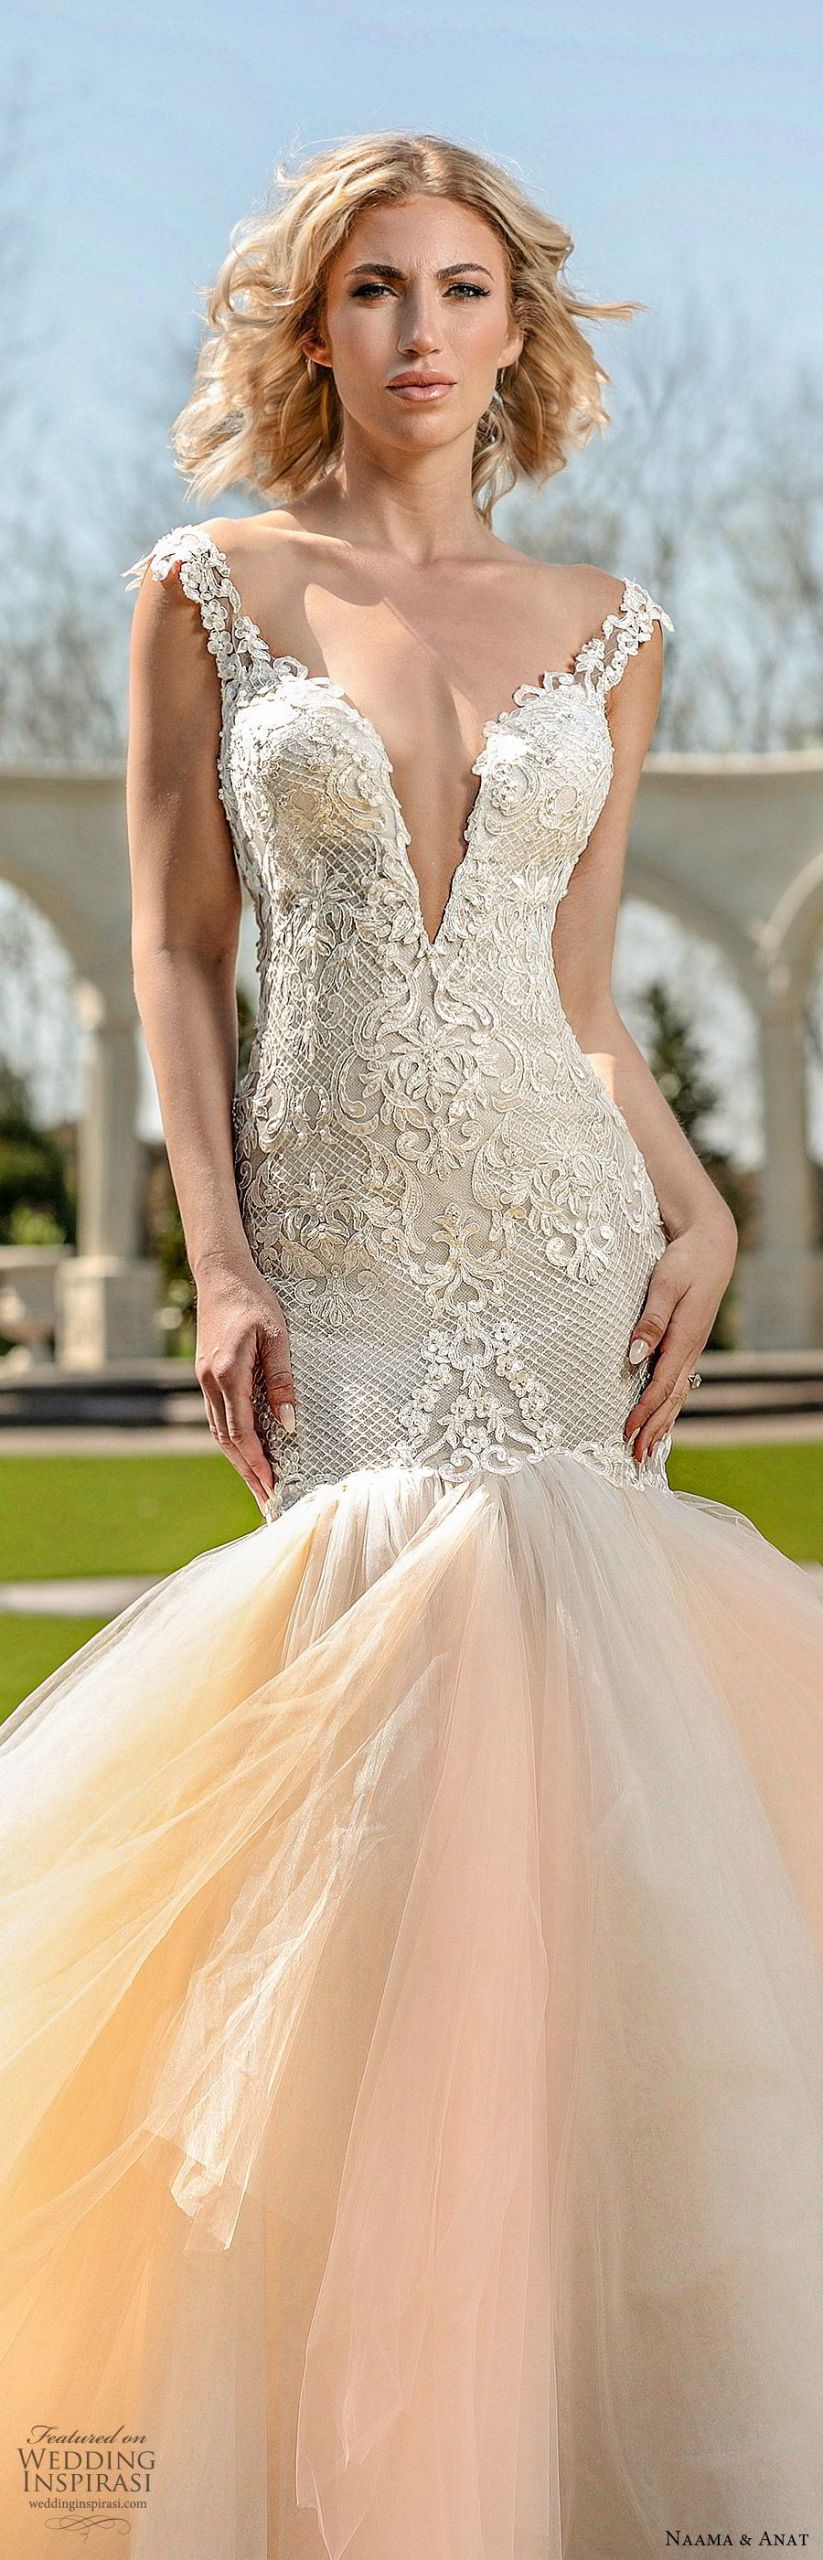 Blush Wedding Gowns 2020
 Naama & Anat Spring 2020 Wedding Dresses — “Royal Blossom